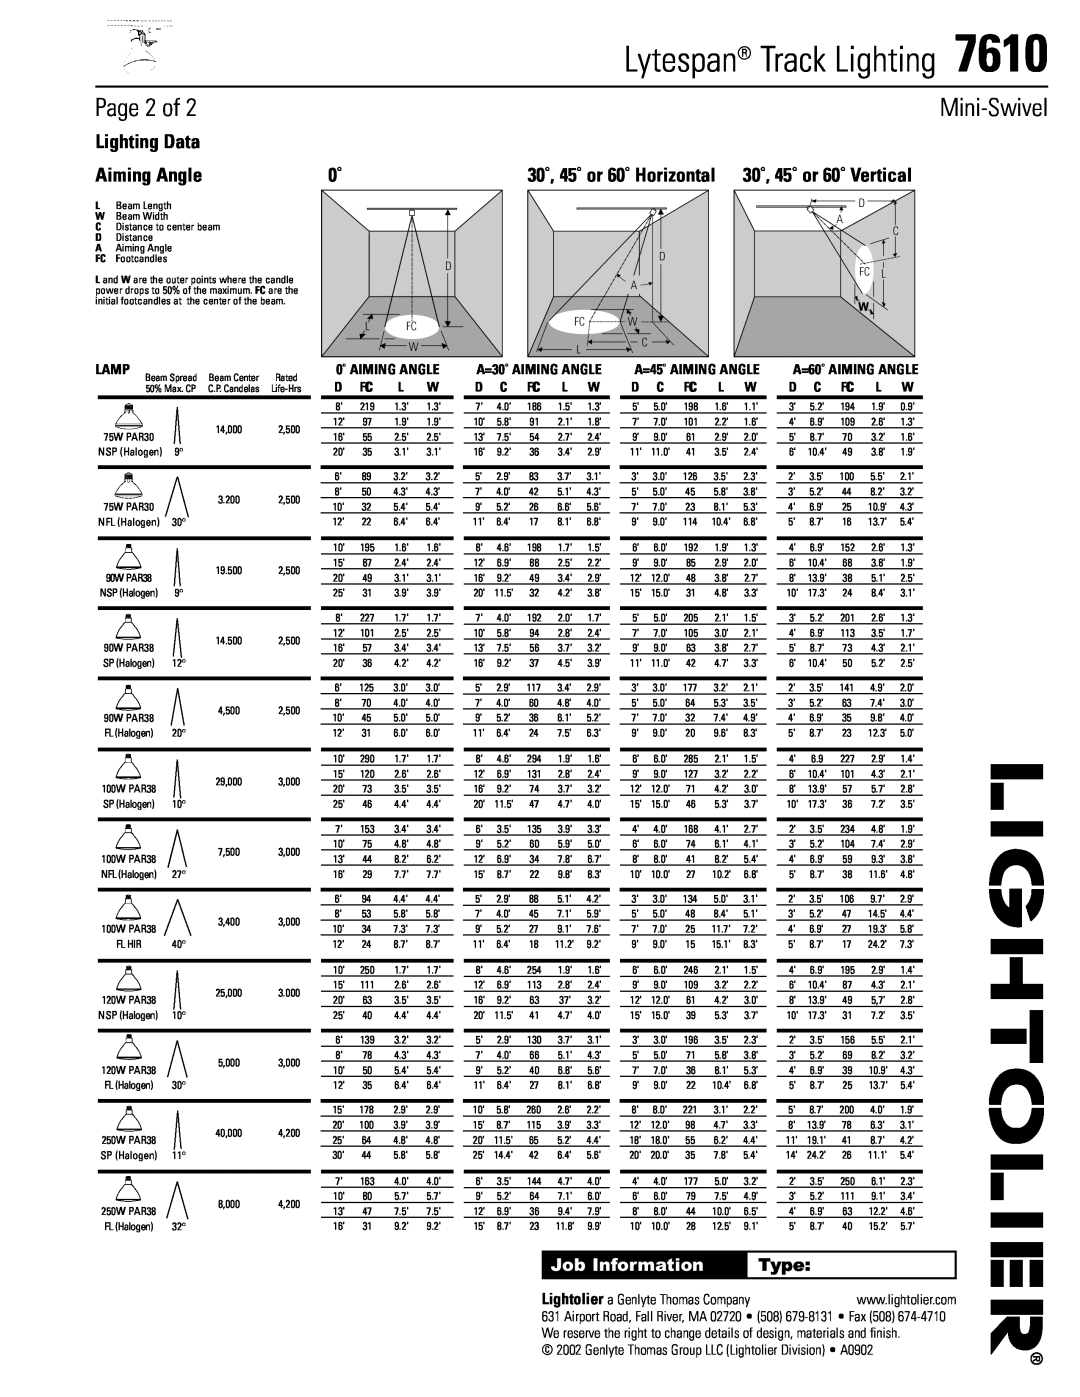 Lightolier 7610 Lighting Data, Aiming Angle, Type, Lamp, 0˚ AIMING ANGLE, Lytespan Track Lighting, Page 2 of, Mini-Swivel 